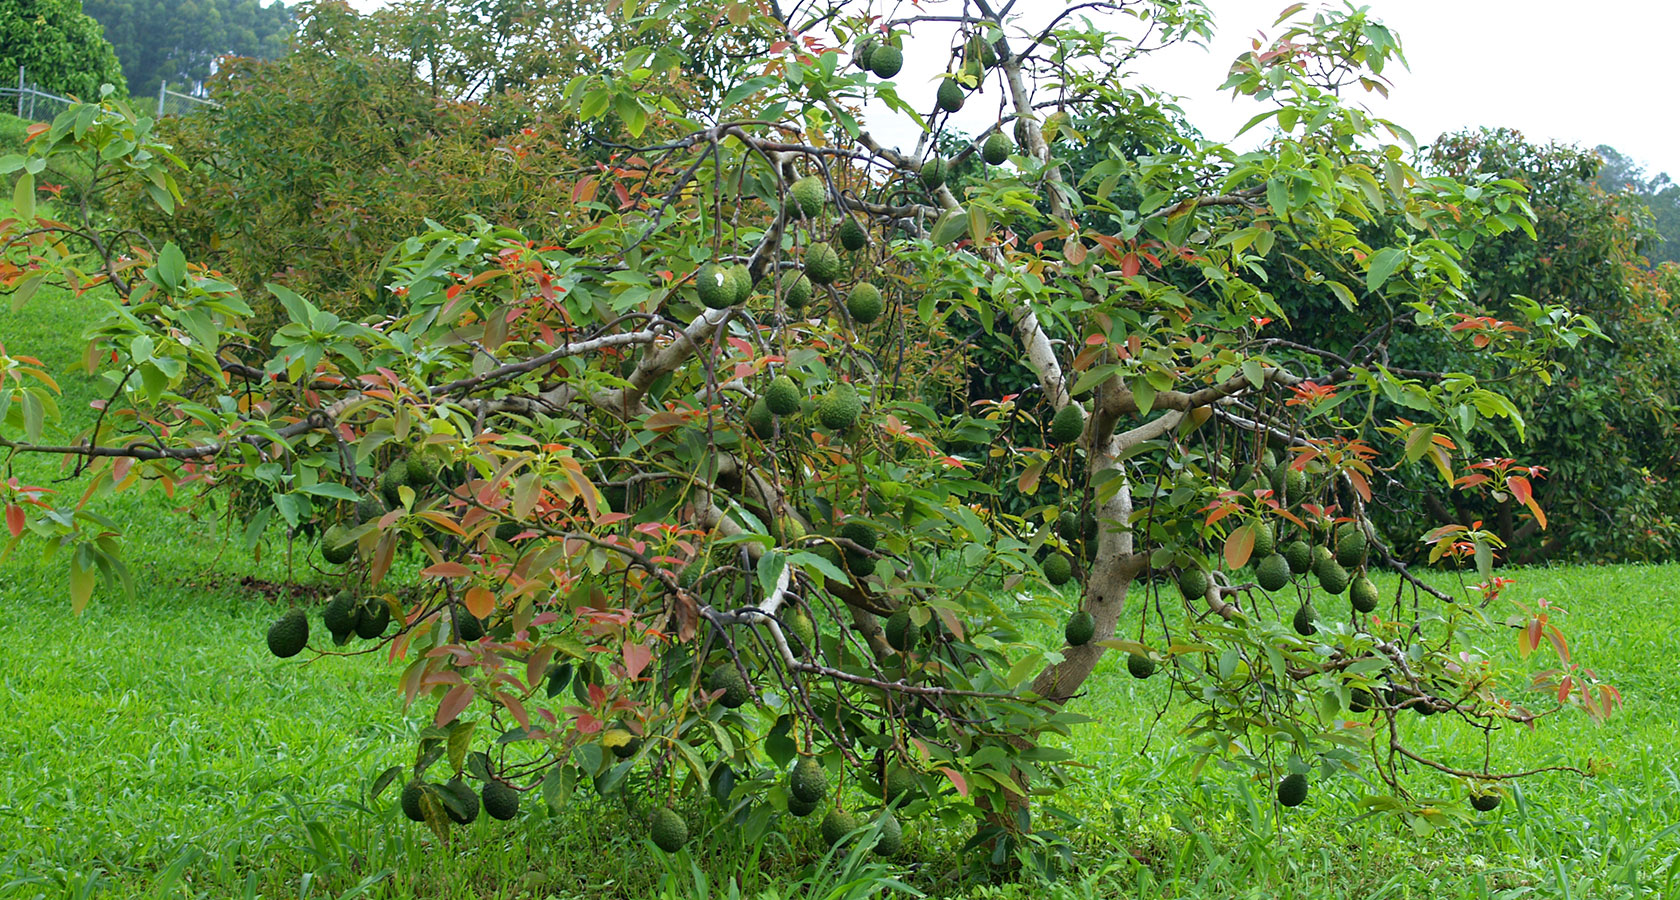 Avocado, Persea americana. Planted Tree with fruits